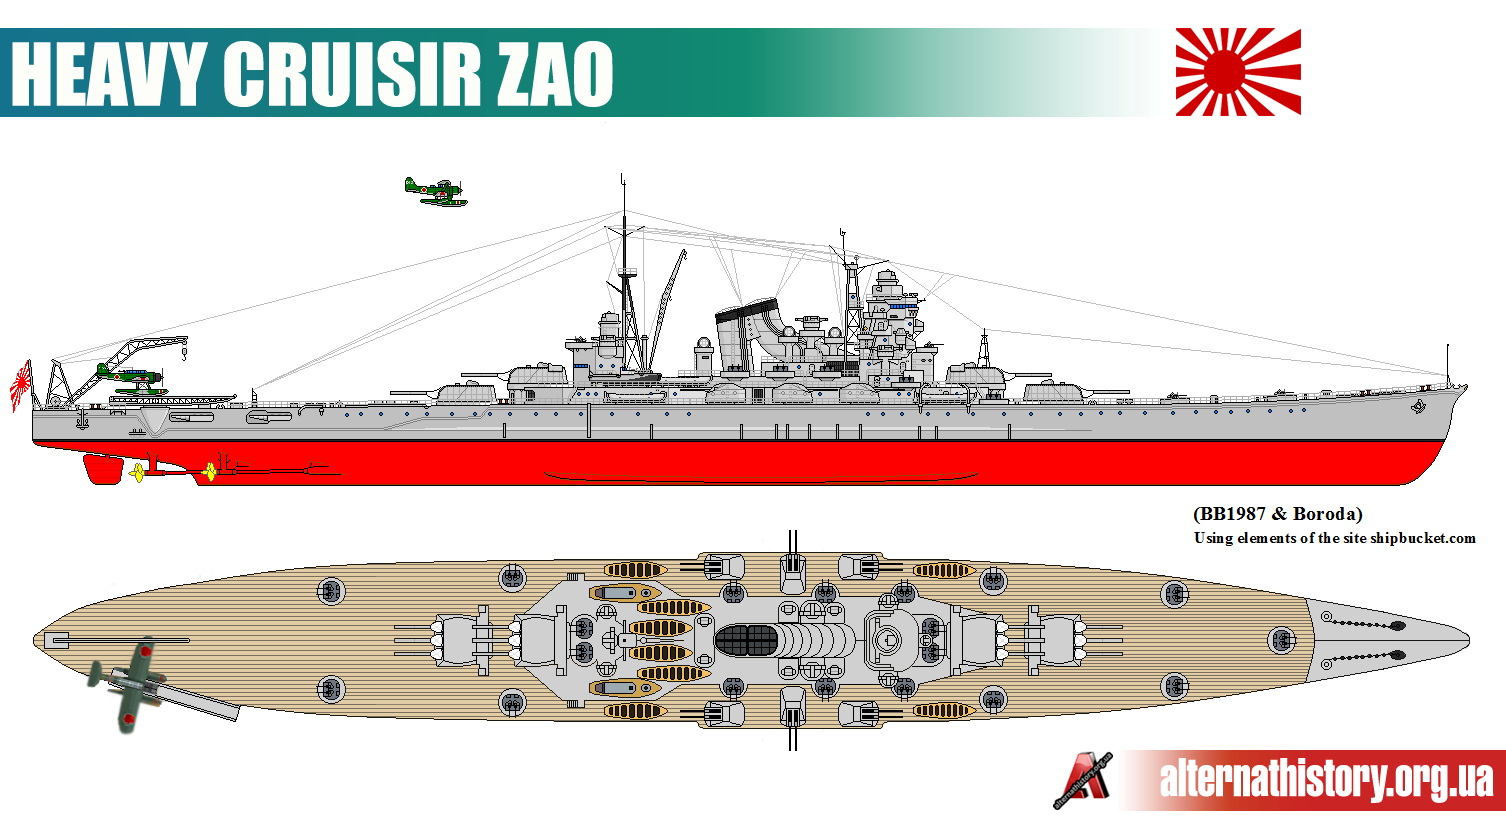 Реконструкция внешнего вида тяжёлого крейсера Zaō